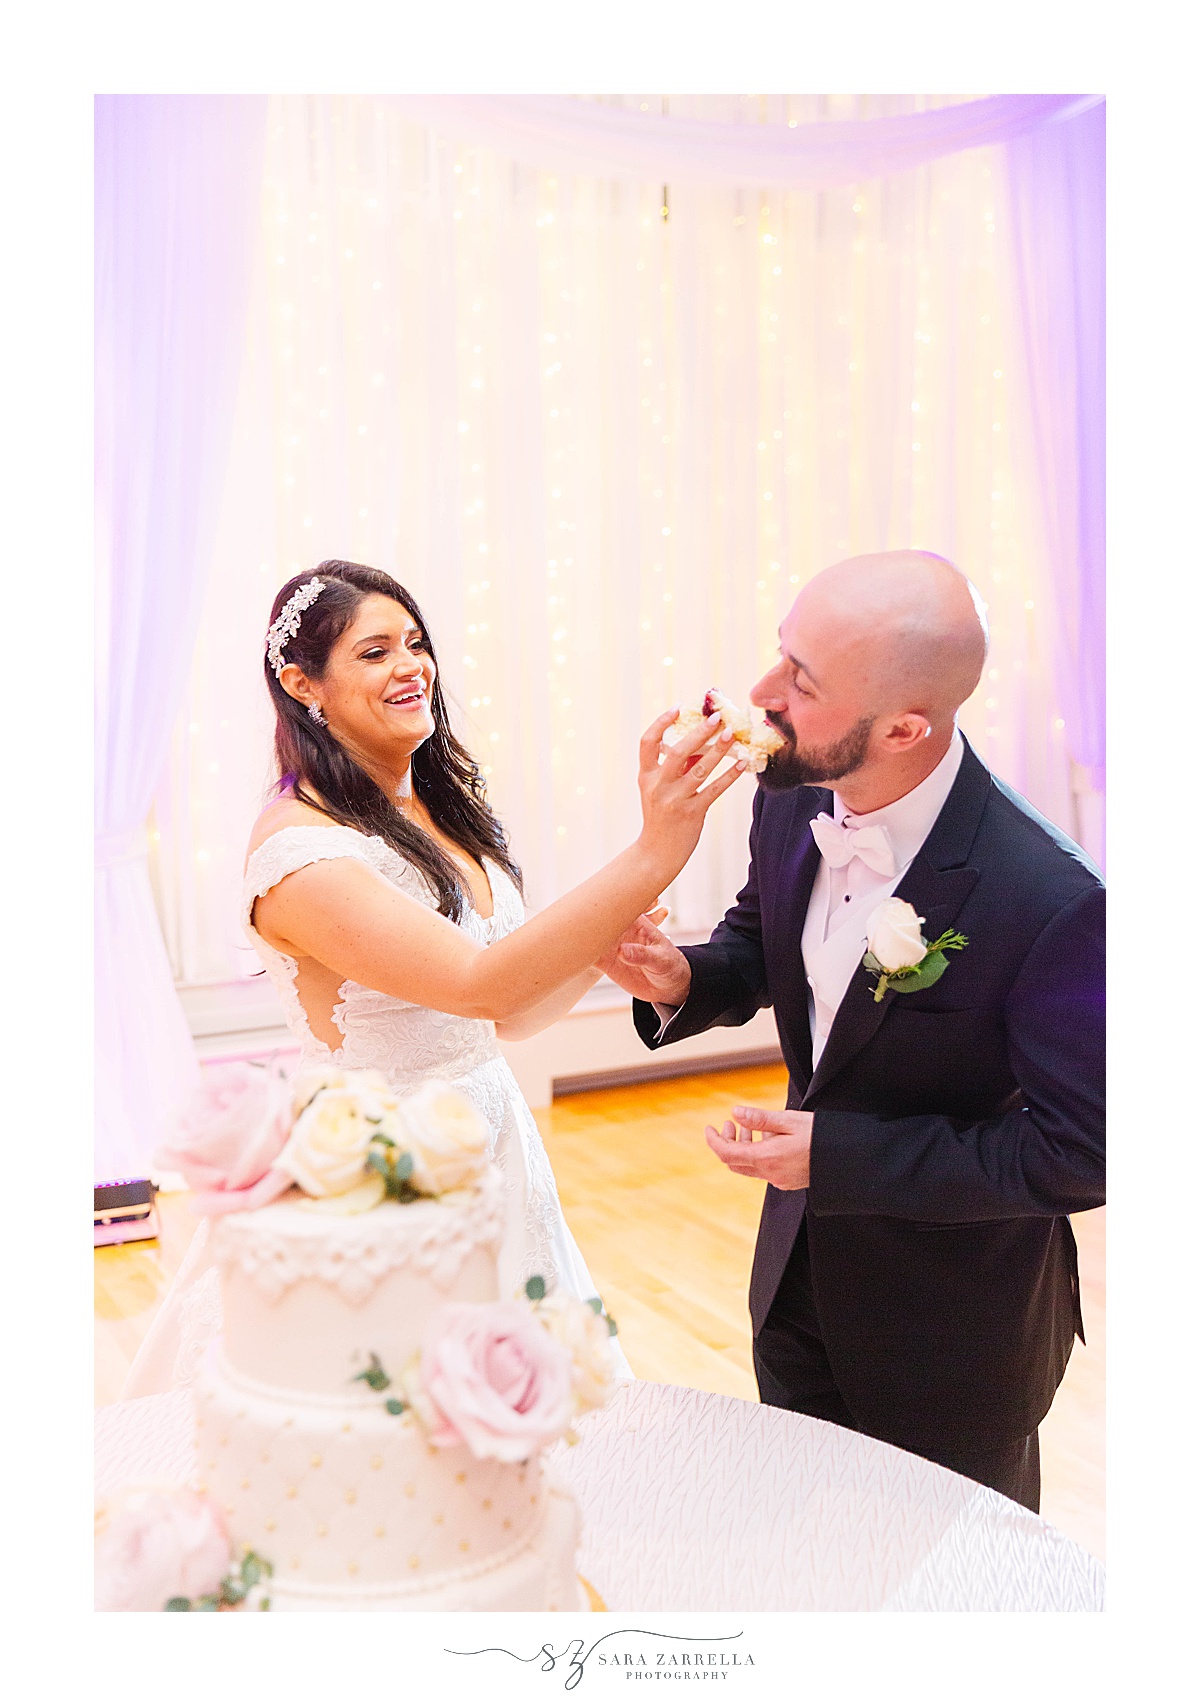 bride feeds groom cake during wedding reception in RI